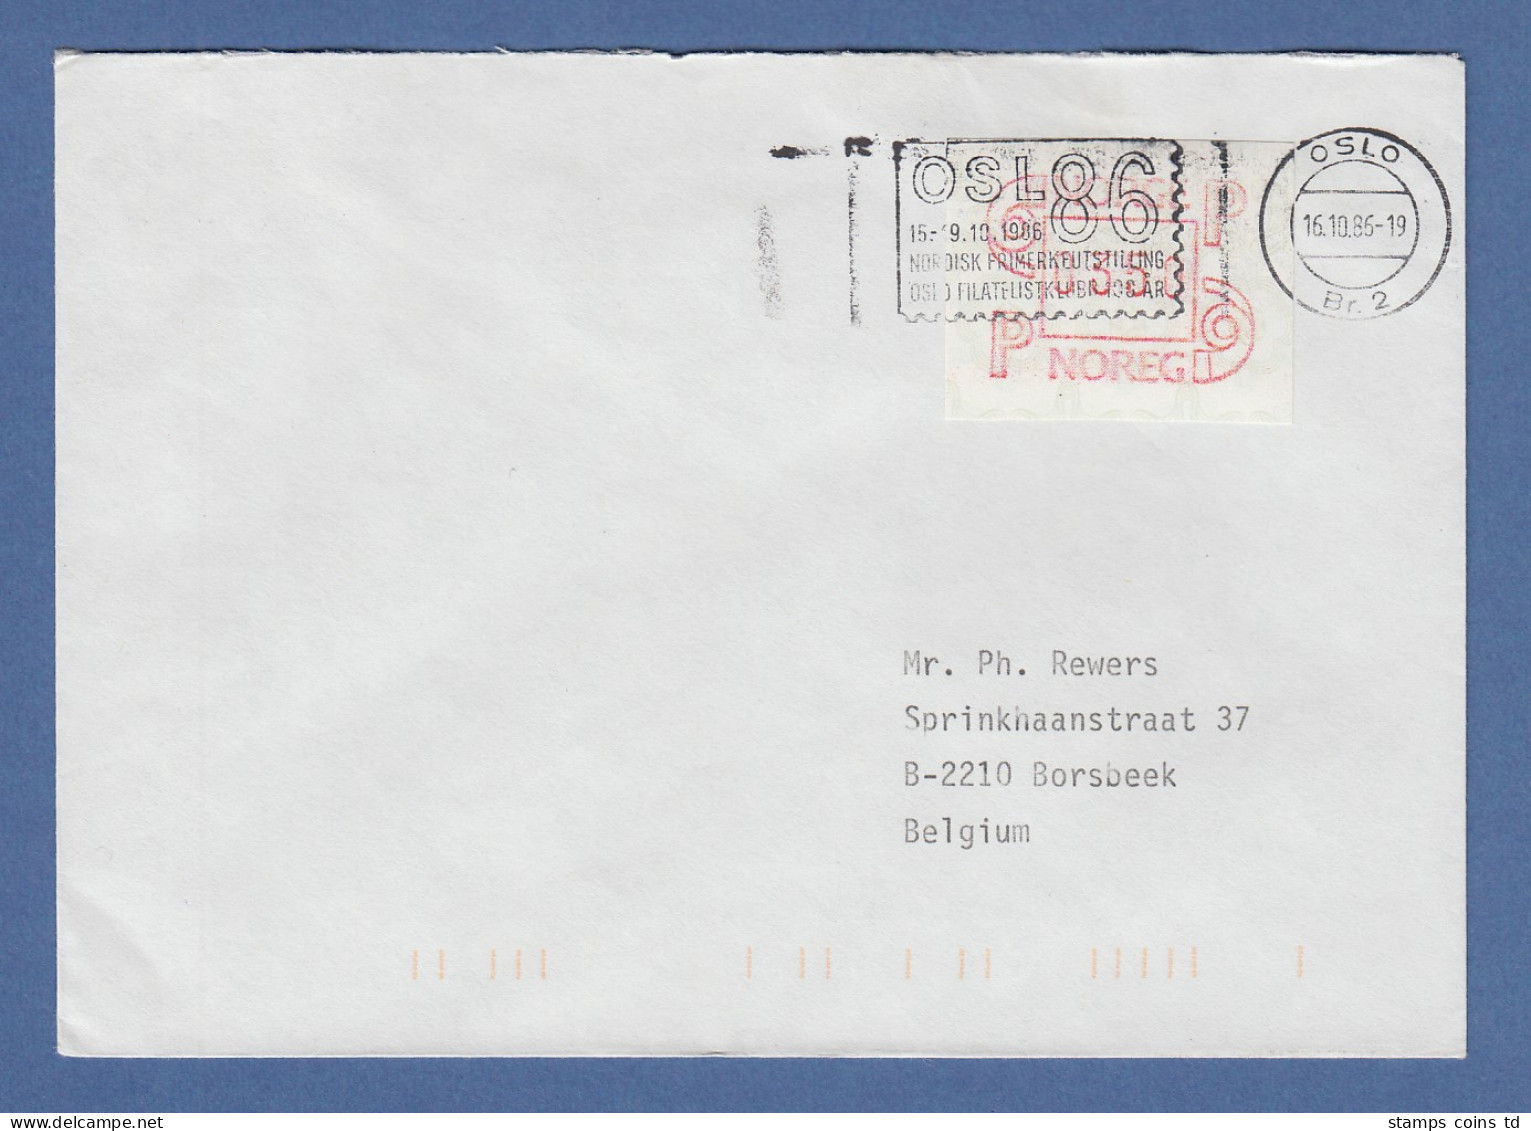 Norwegen 1986 FRAMA-ATM Mi.-Nr. 3.2b Wert 0350 Auf FDC OSLO Masch.-O 16.10.86 B - Machine Labels [ATM]